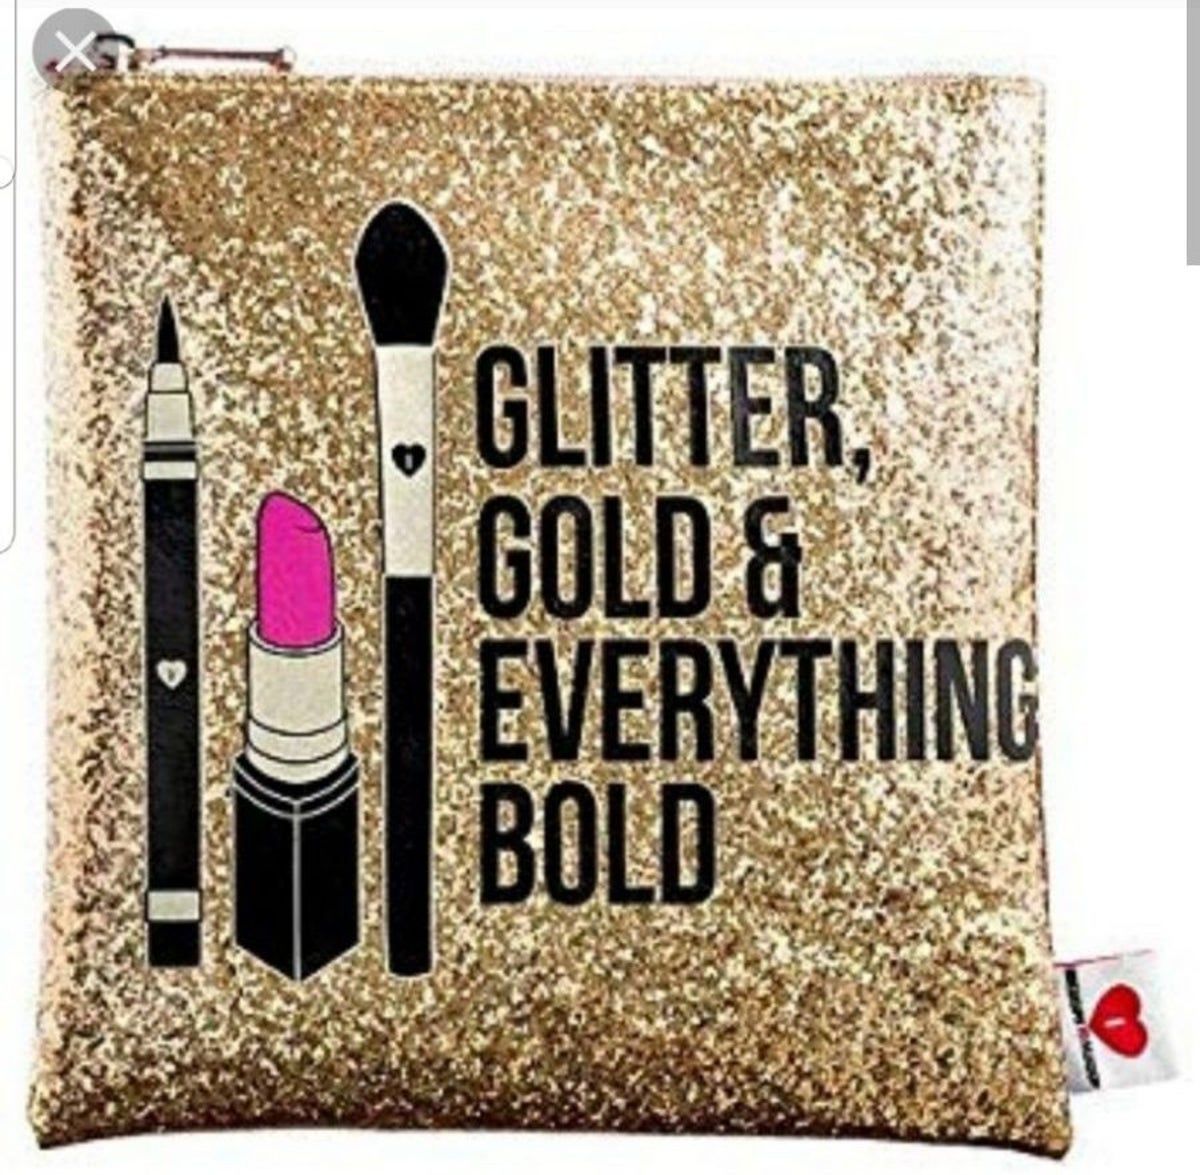 Glitter Gold & Everything Bold Makeup Ba on Mercari -   9 makeup Quotes gold ideas